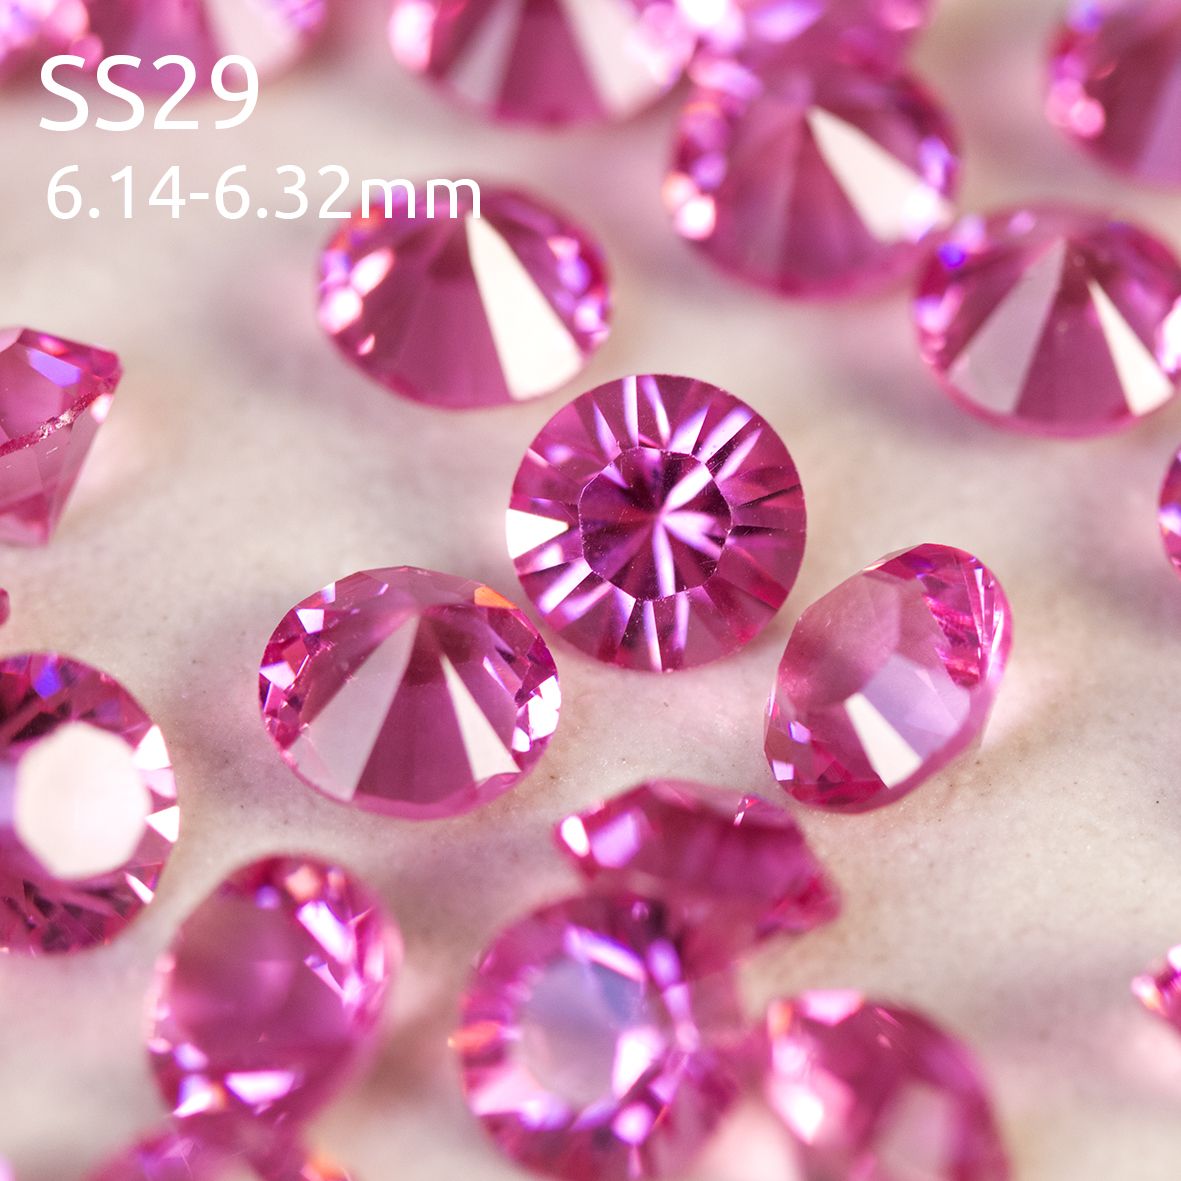 Swarovski ® Pointed Back Crystals - LARGE category image